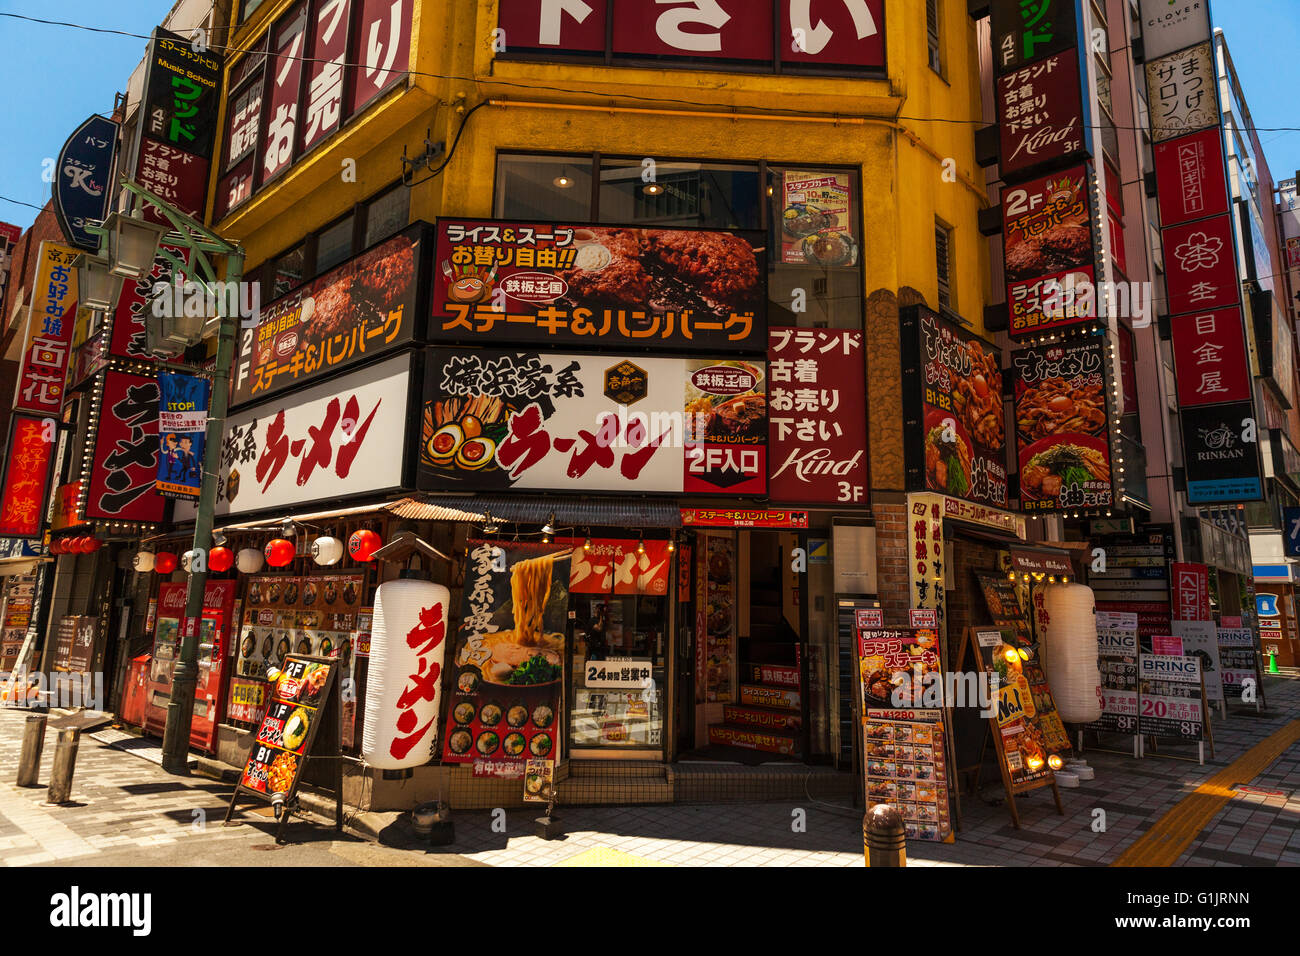 A Japanese restaurant advertising food Stock Photo